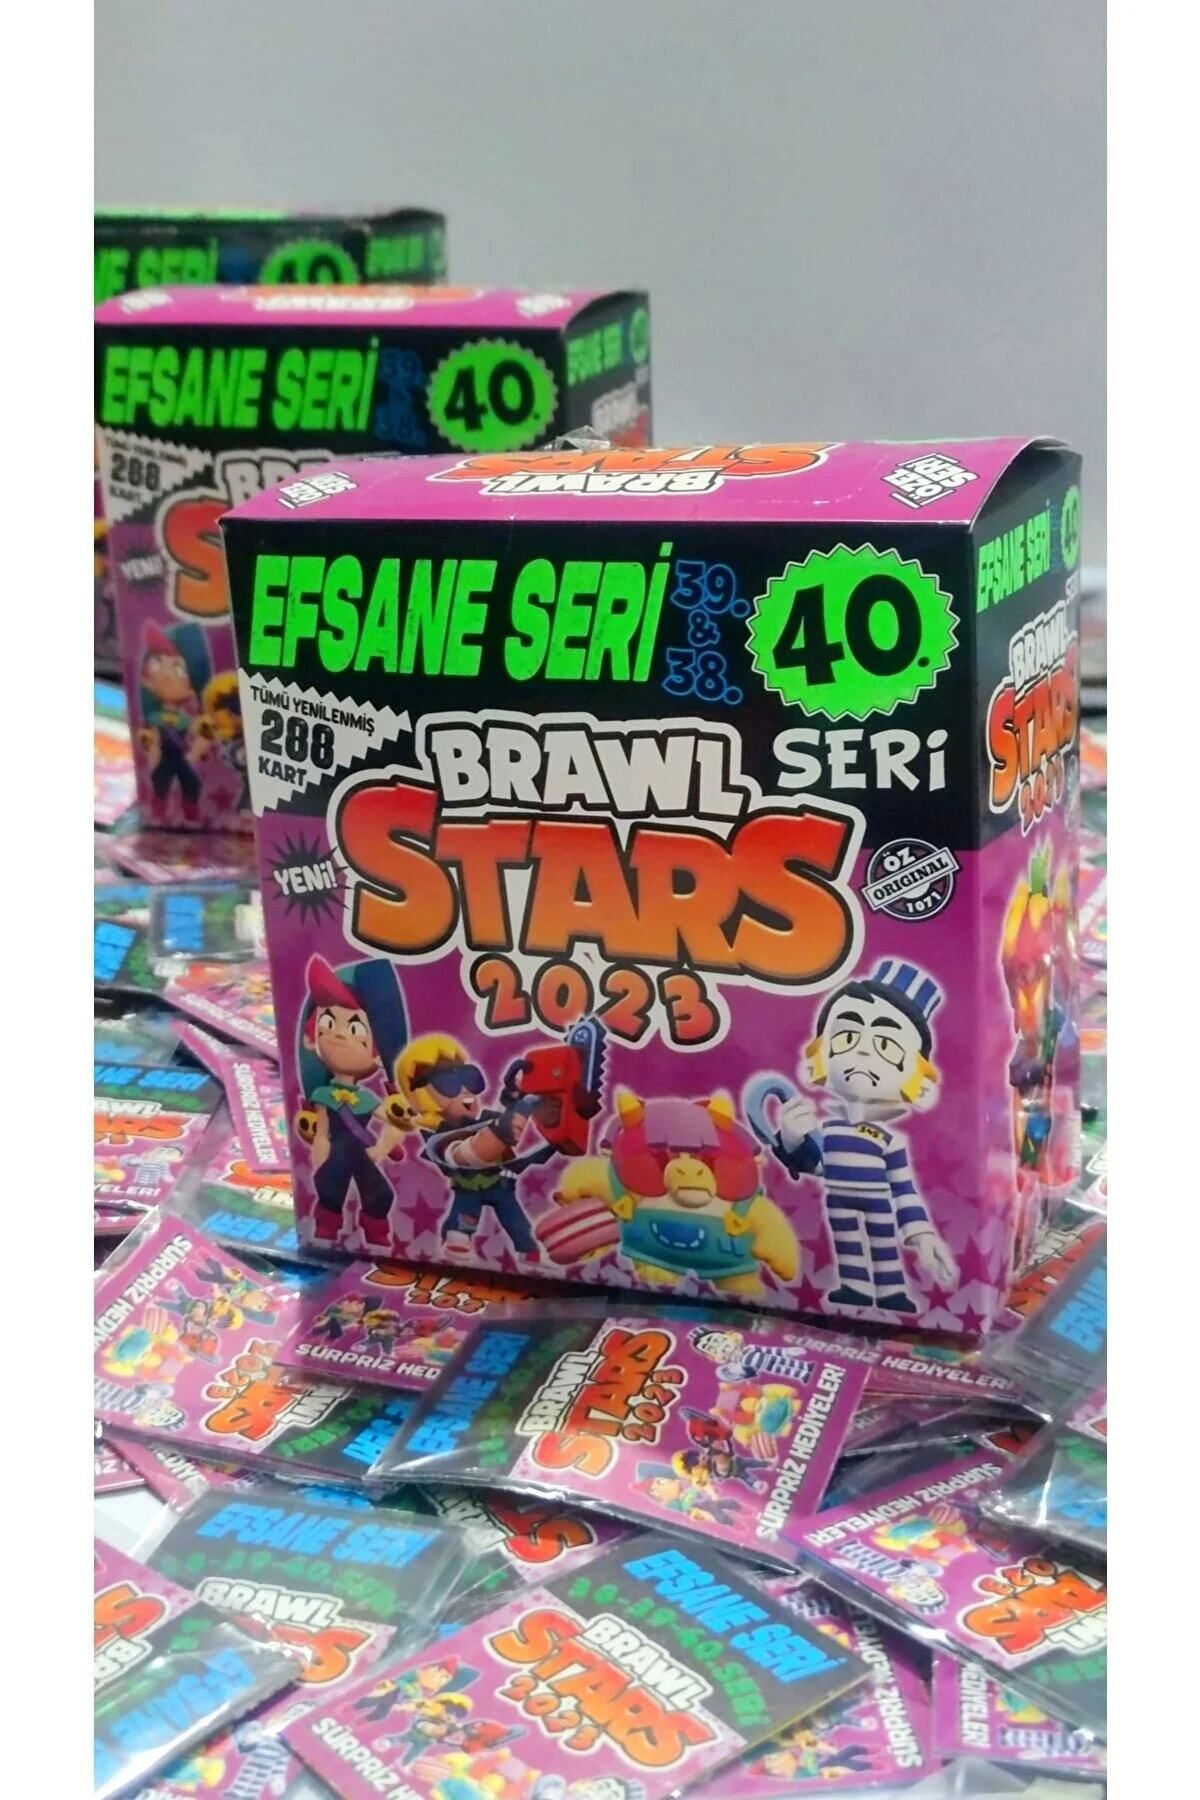 BRAWL STARS Efsane Seri Oyun Kartı 100 Paket 200 Kart 38-39-40. Son Seri . Newbrendhome